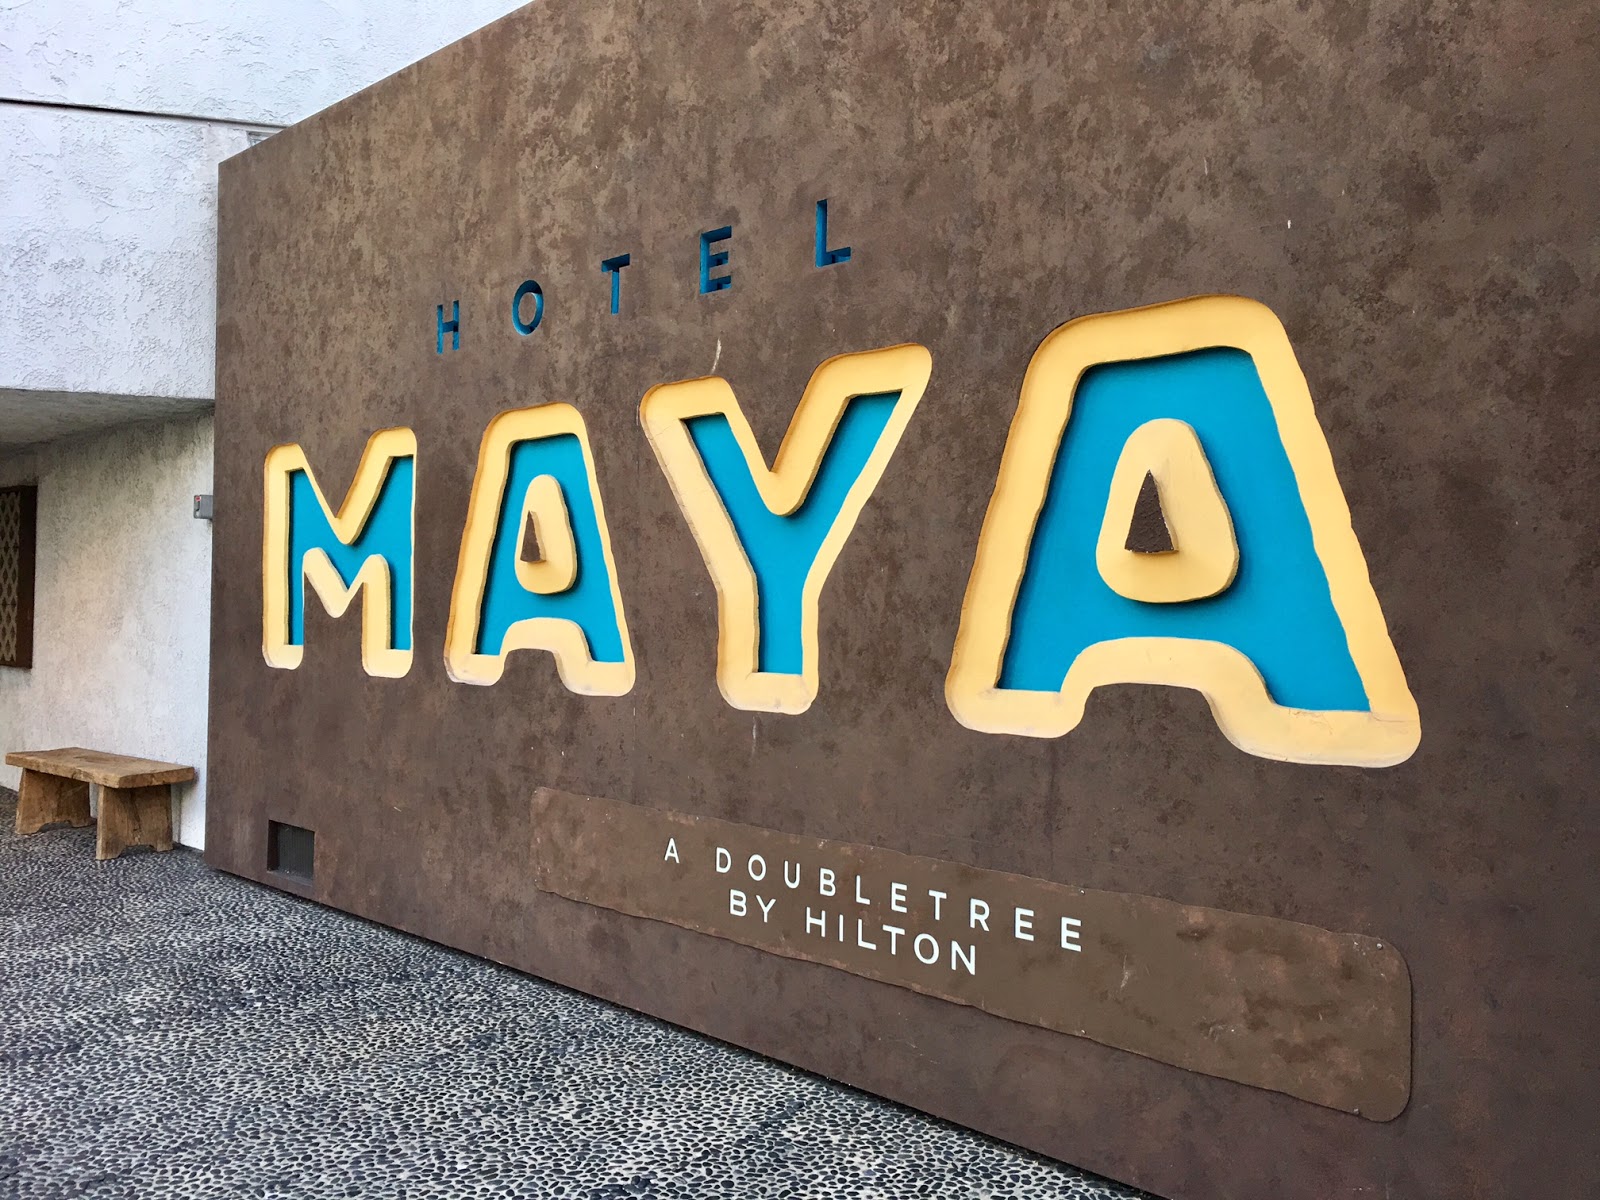 Hotel Maya Long Beach Review